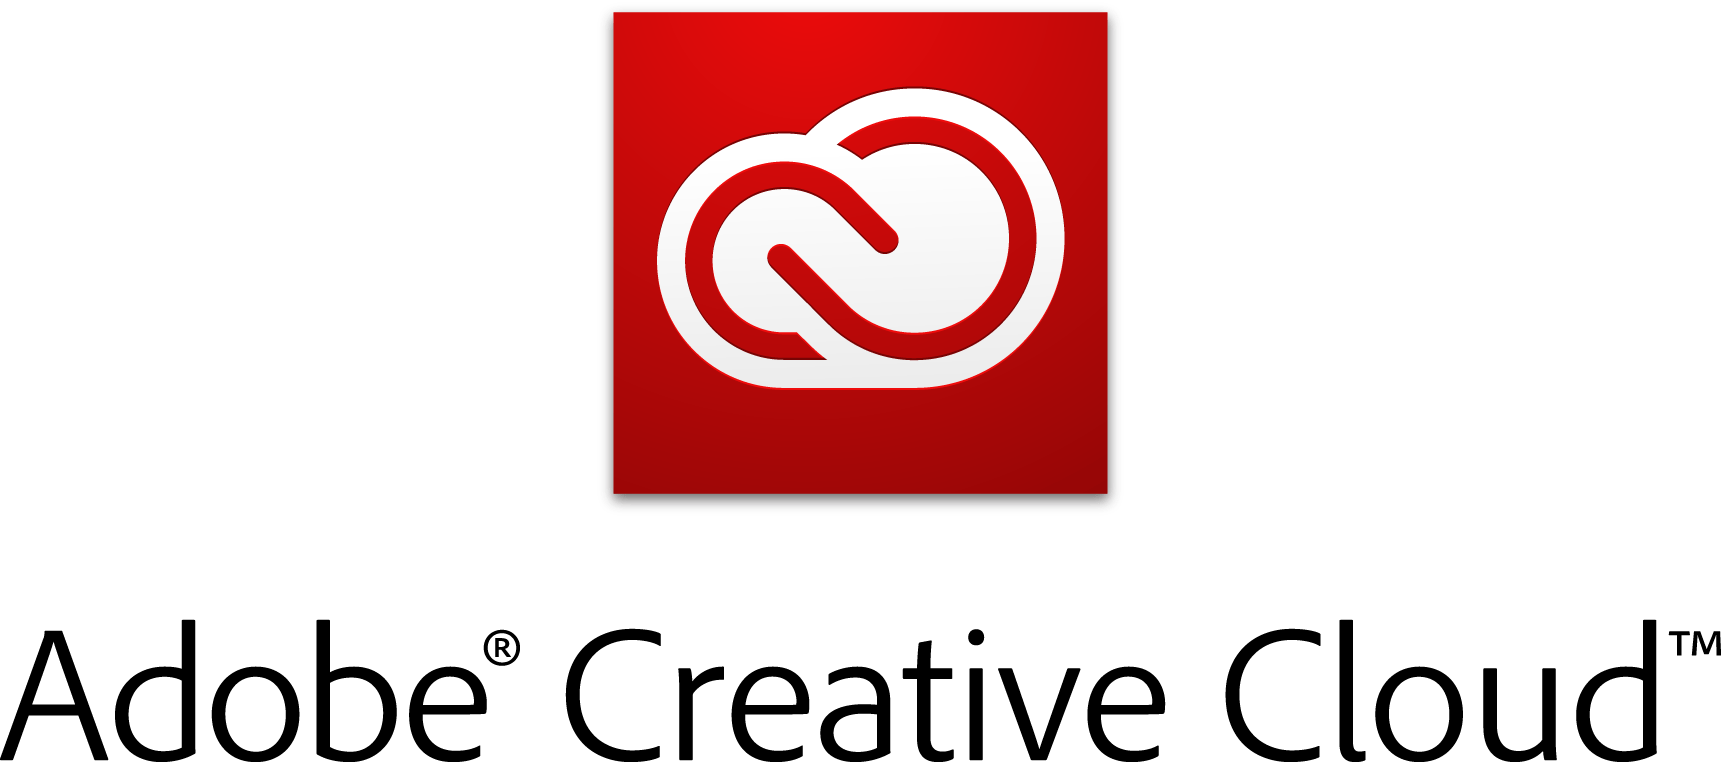 adobe creative cloud icon 2016